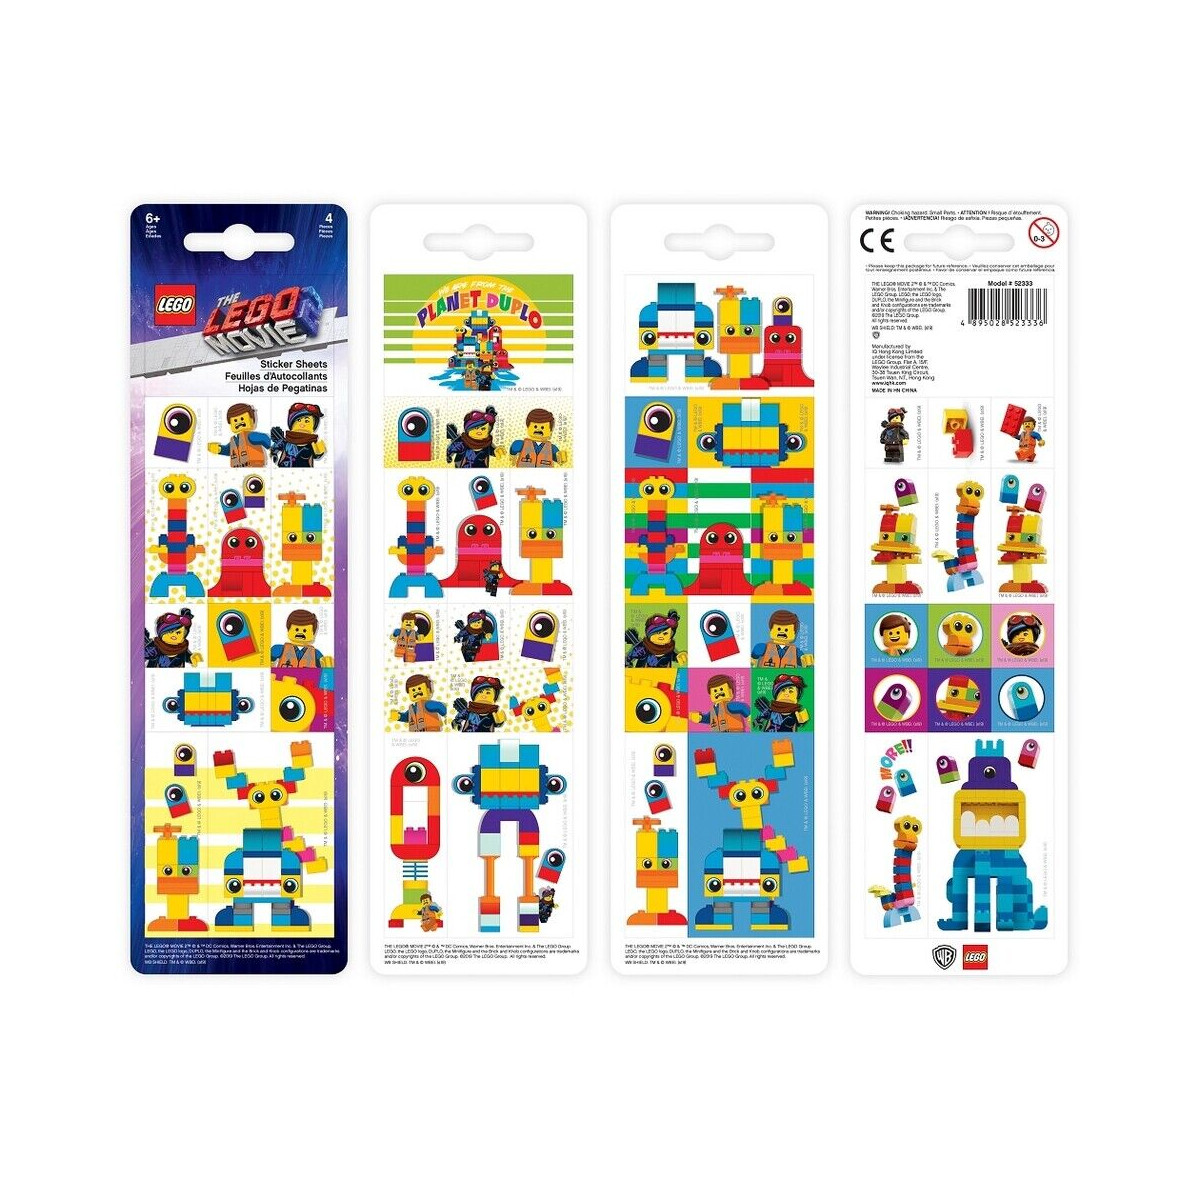 Lego 52333 - The Lego Movie 2 sticker sheets